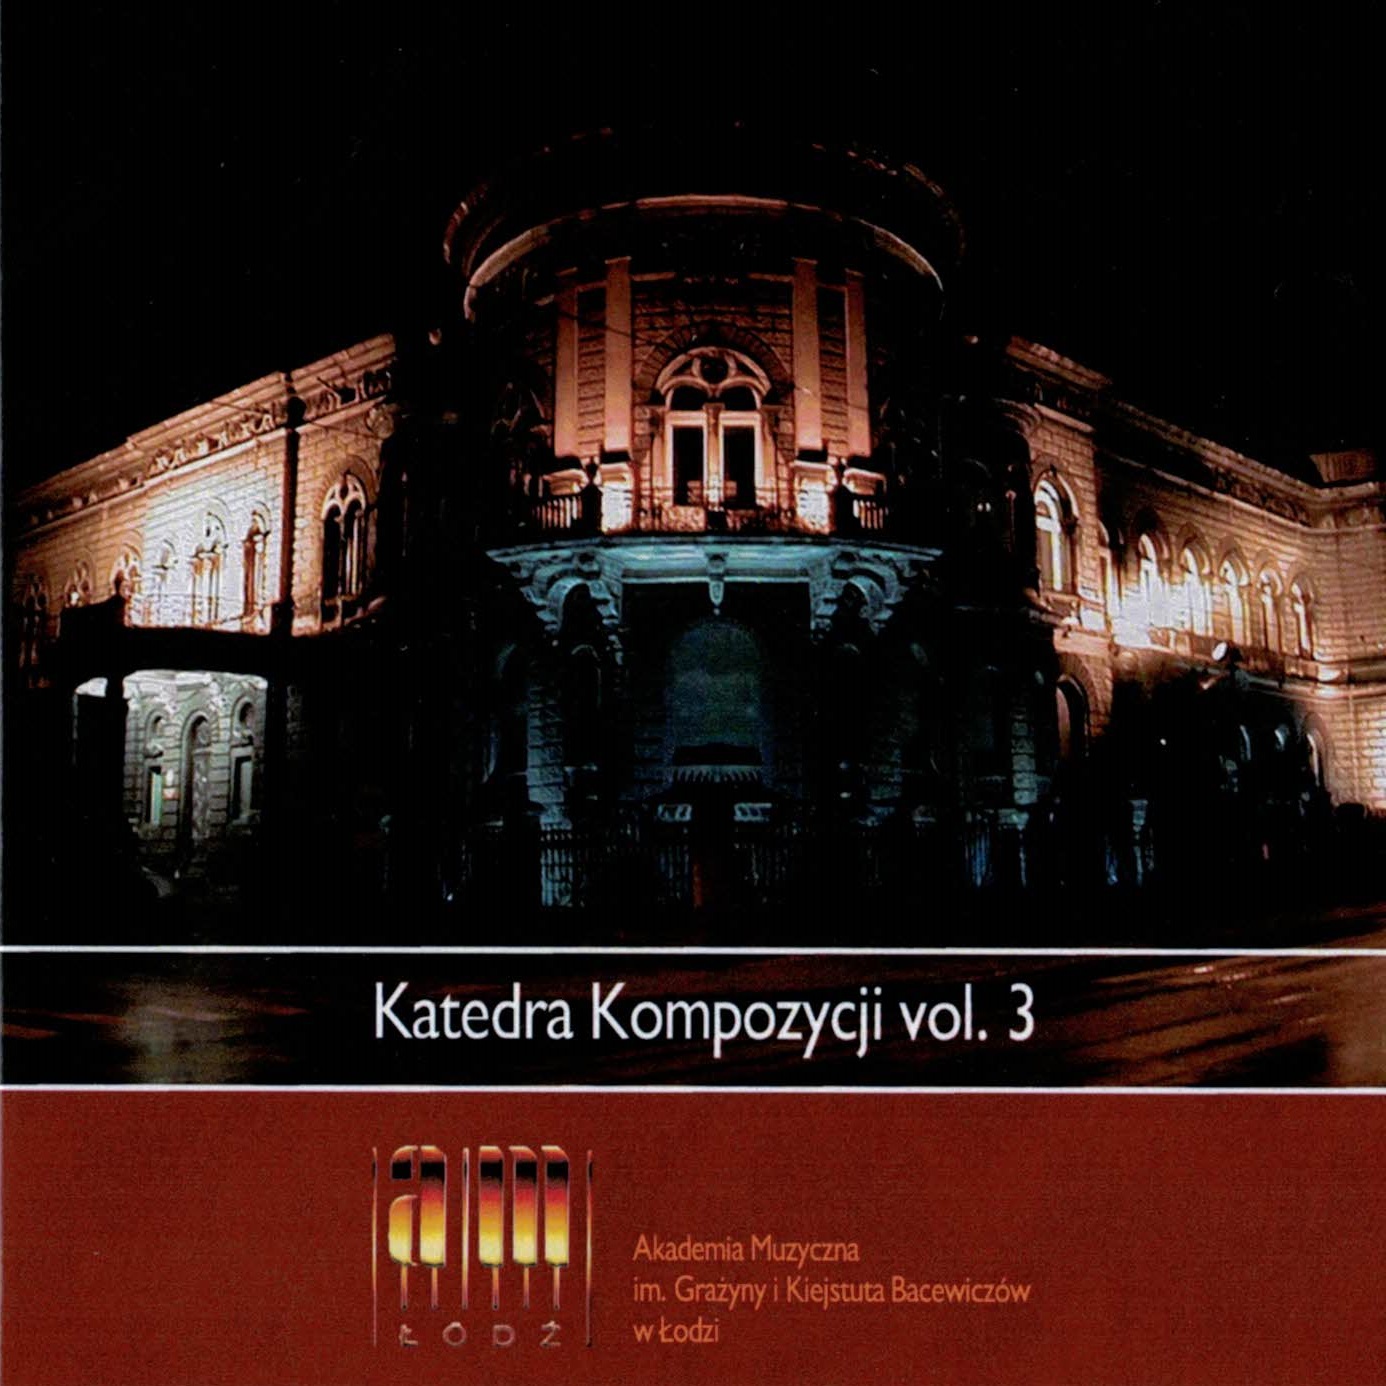 Katedra Kompozycji vol. 3